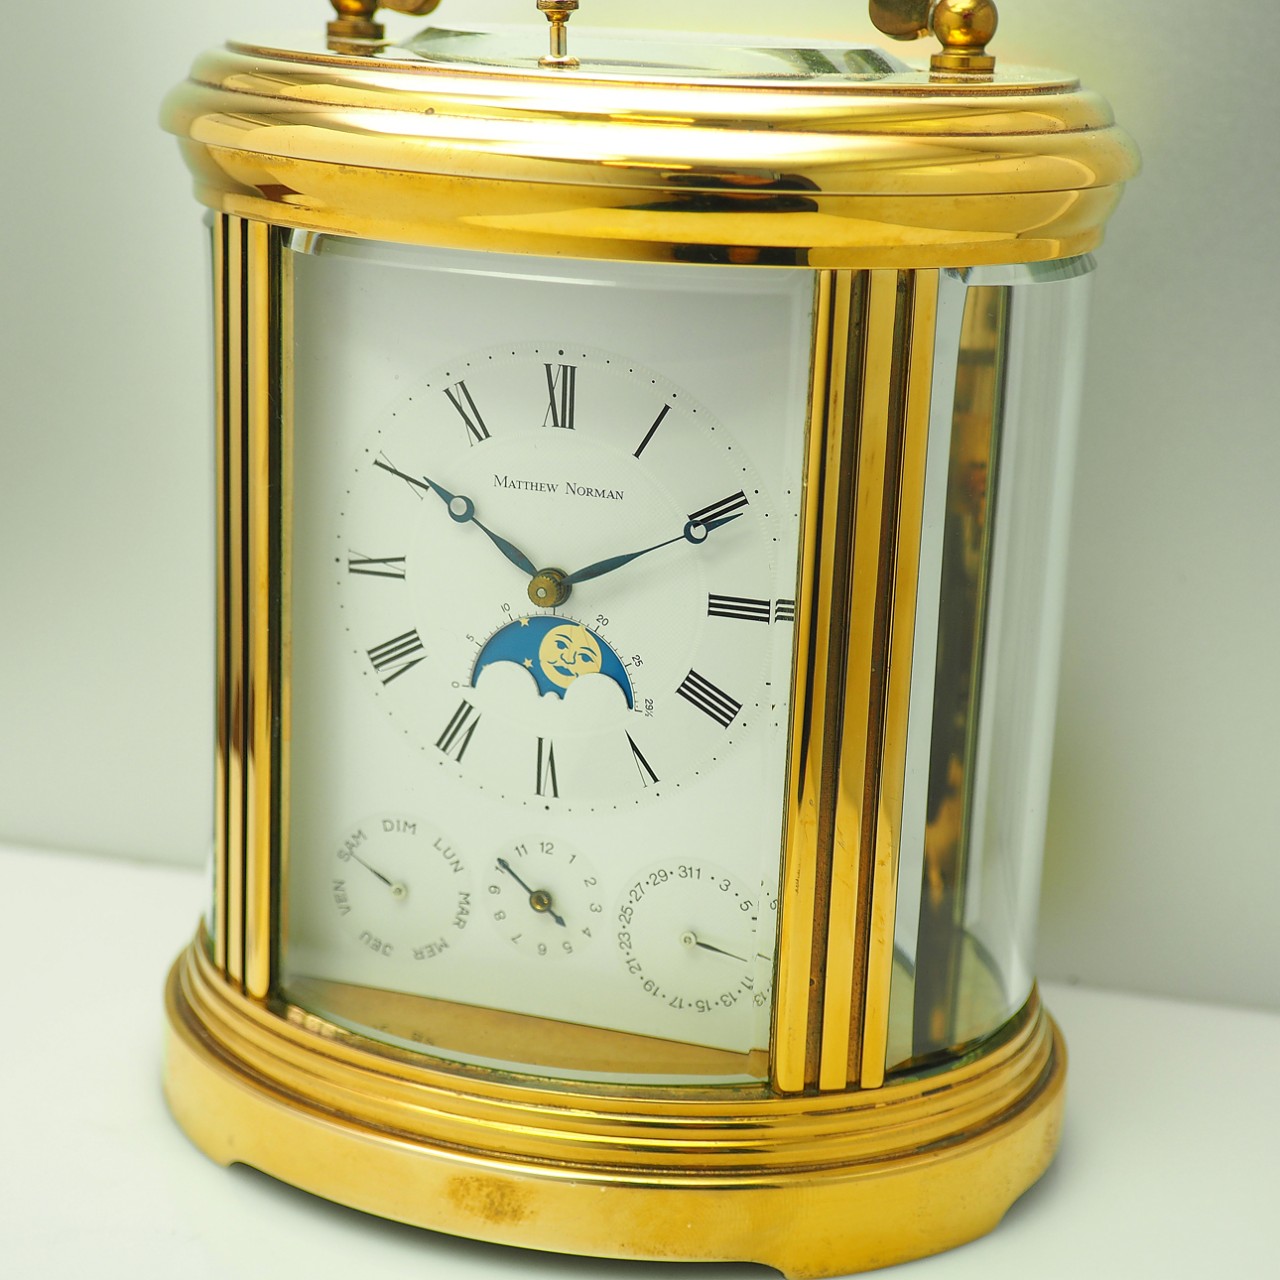 Matthew Norman Carriage Clock Full Calendar Moonphase 8-Days